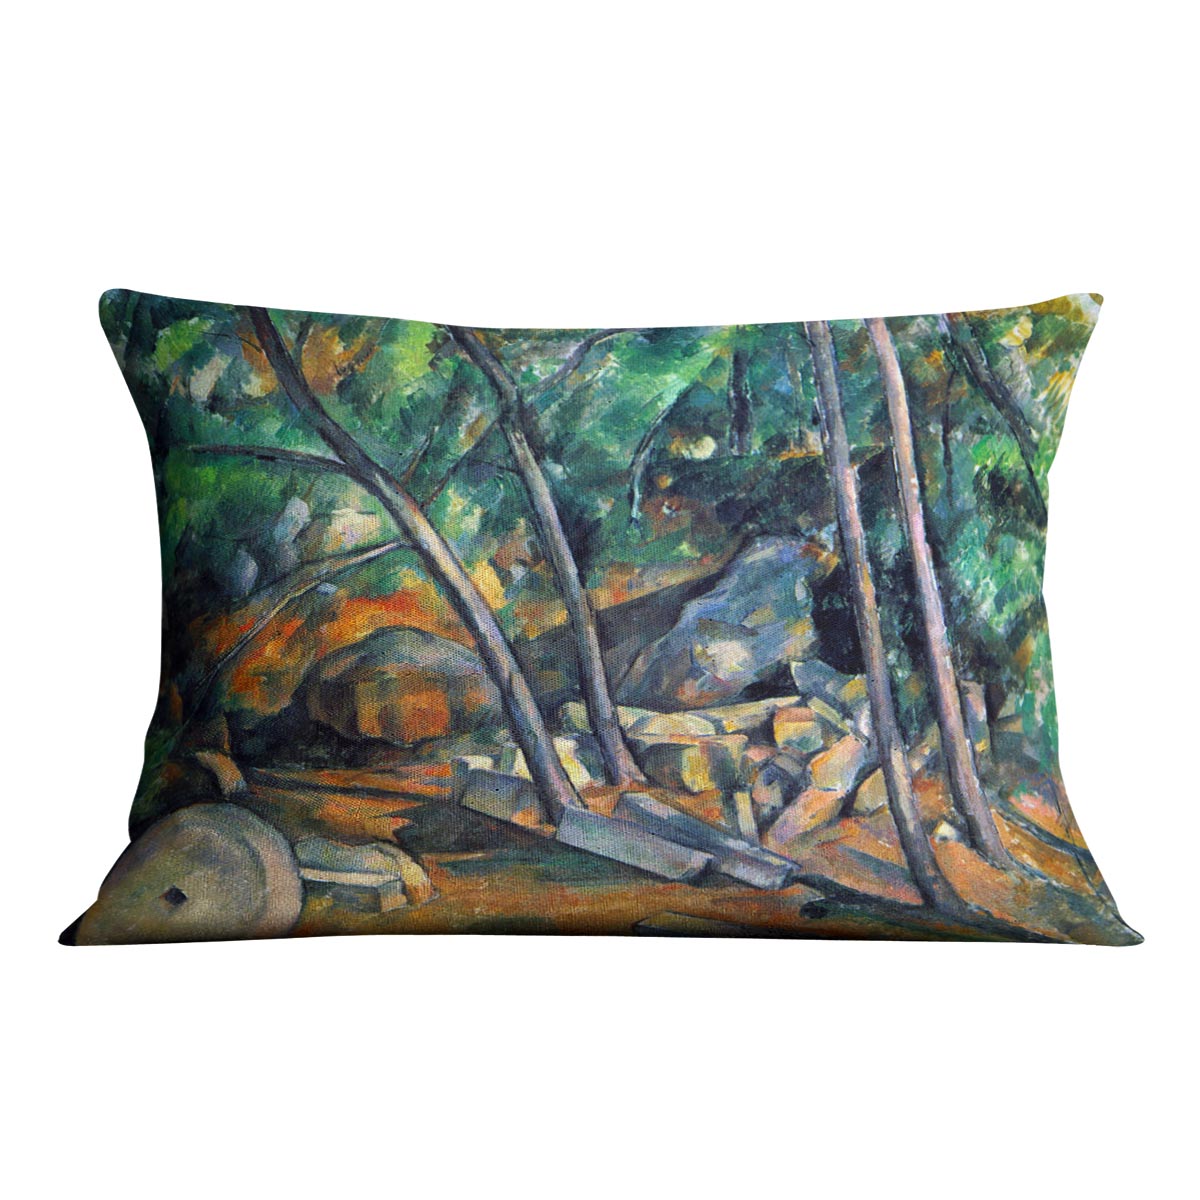 Mill Stone by Cezanne Cushion - Canvas Art Rocks - 4